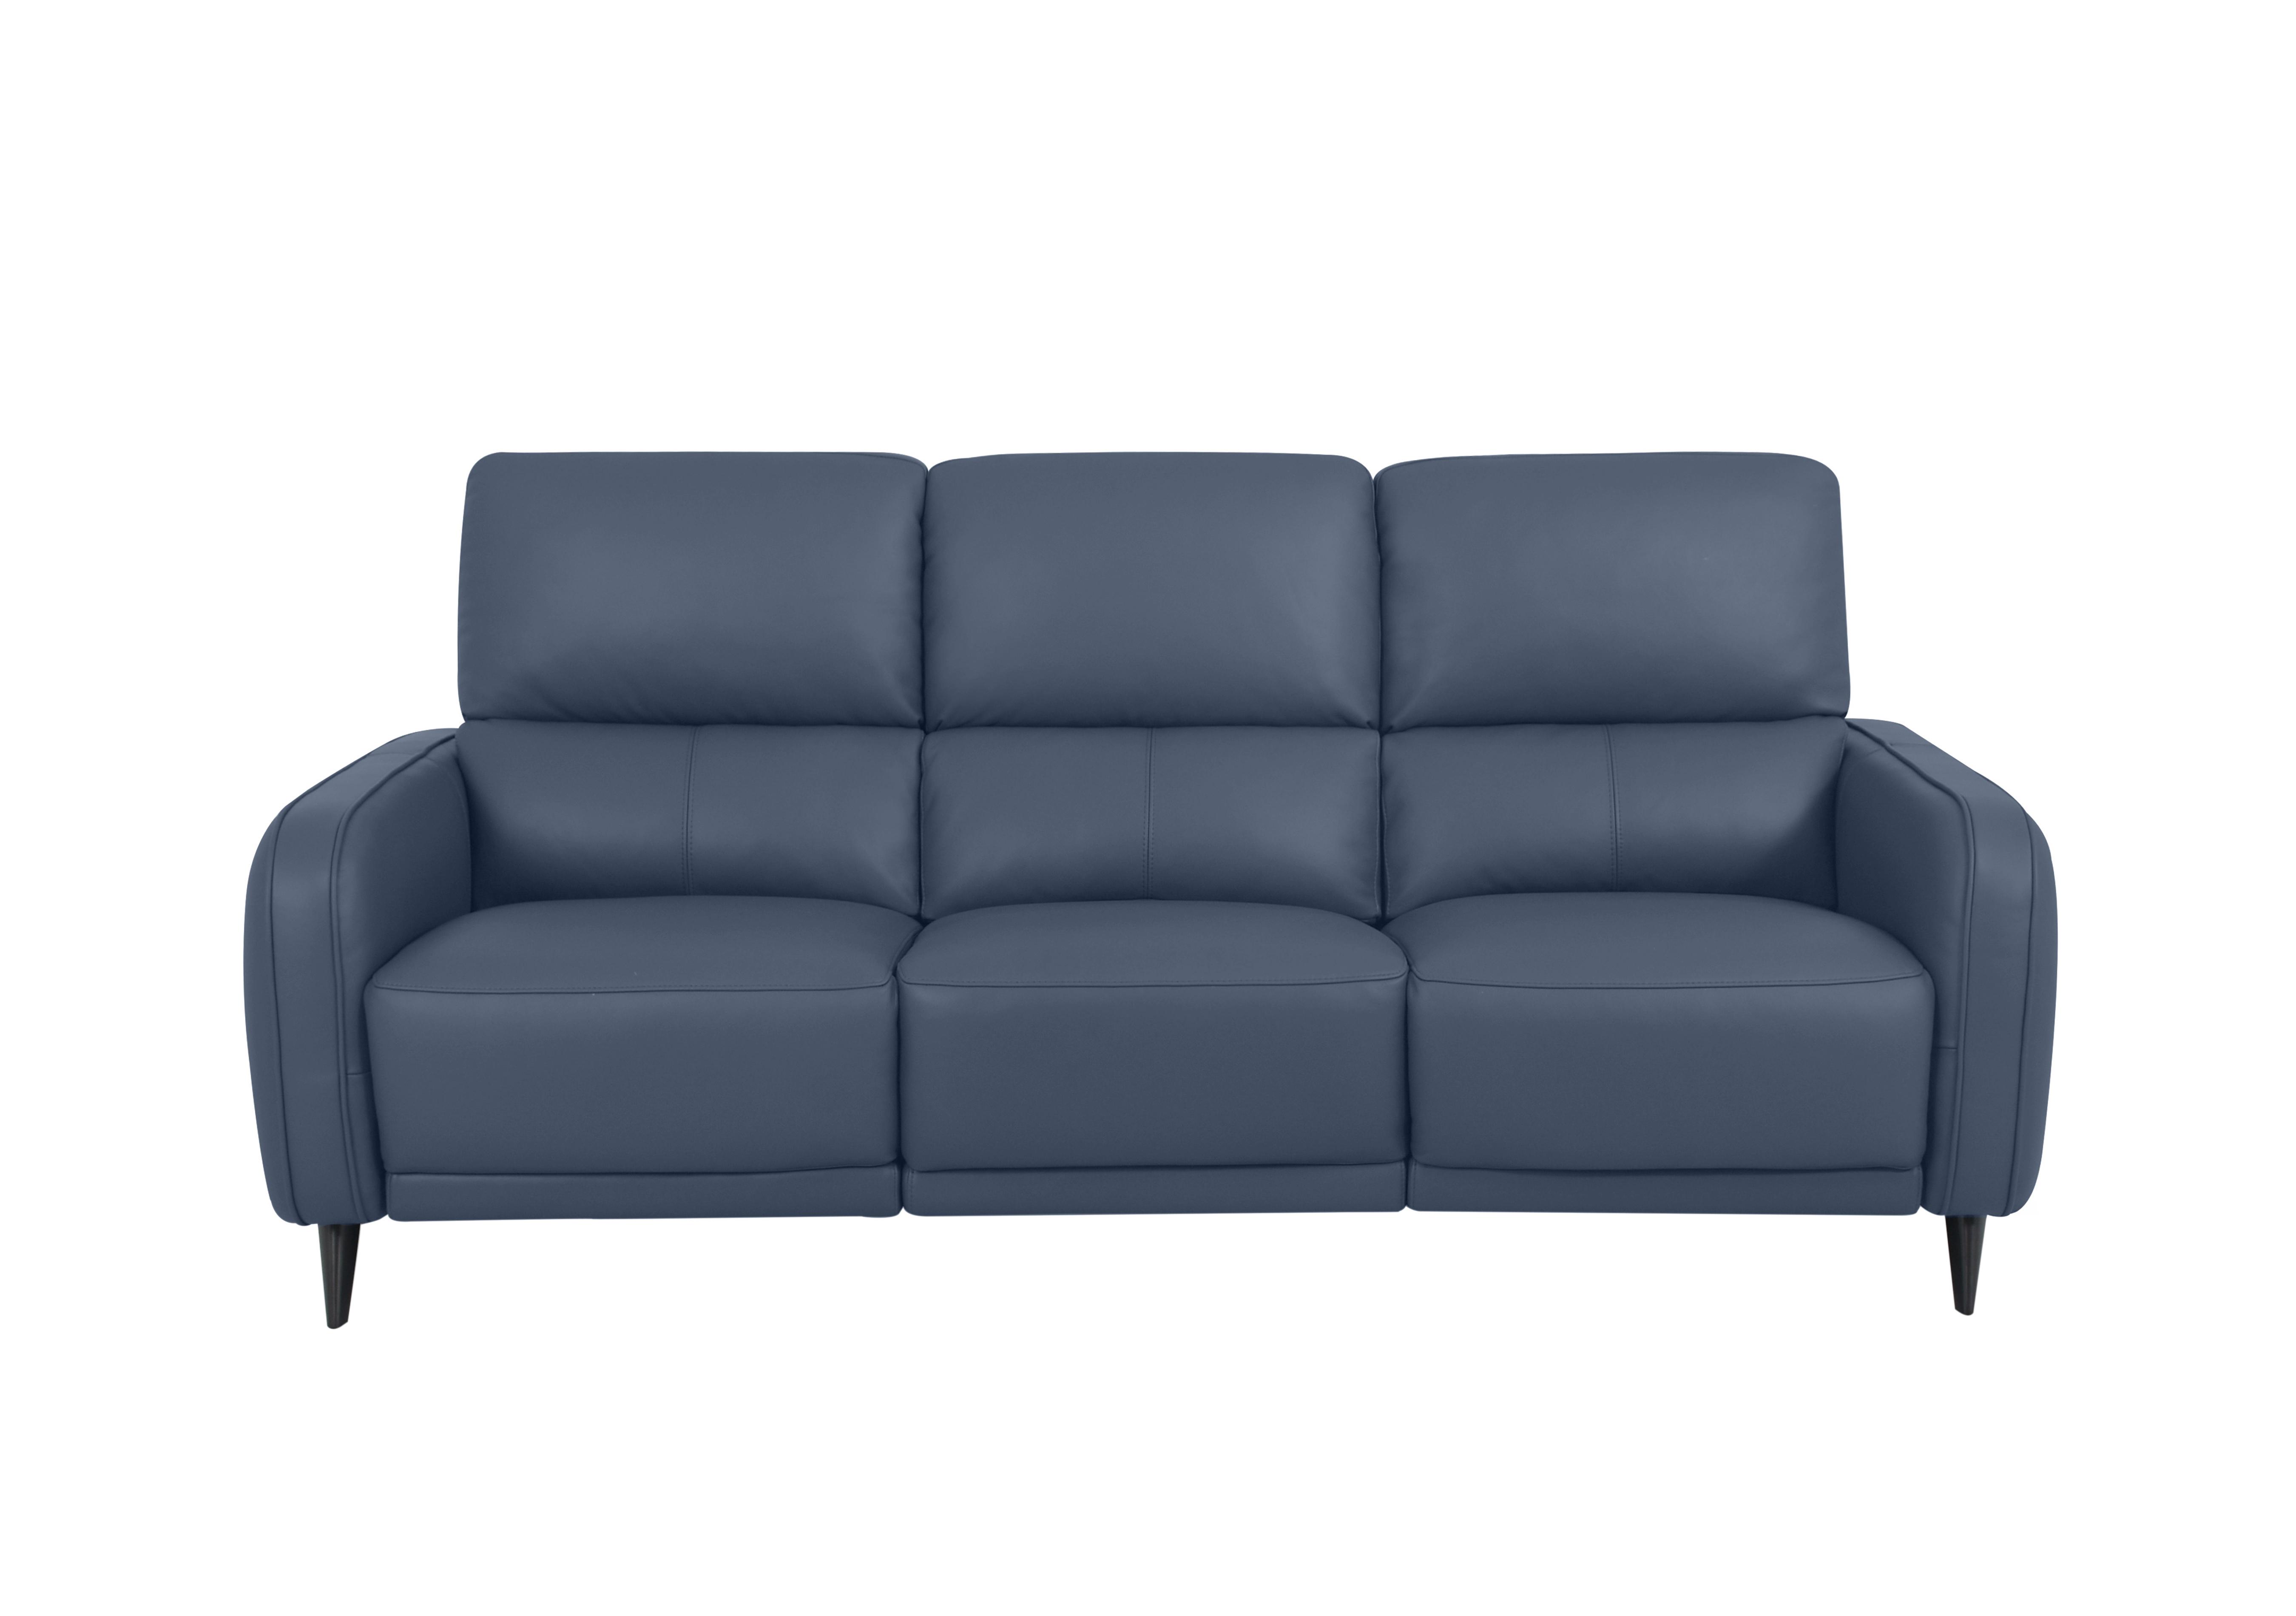 Logan 3 Seater Leather Sofa in Nn-518e Ocean Blue on Furniture Village